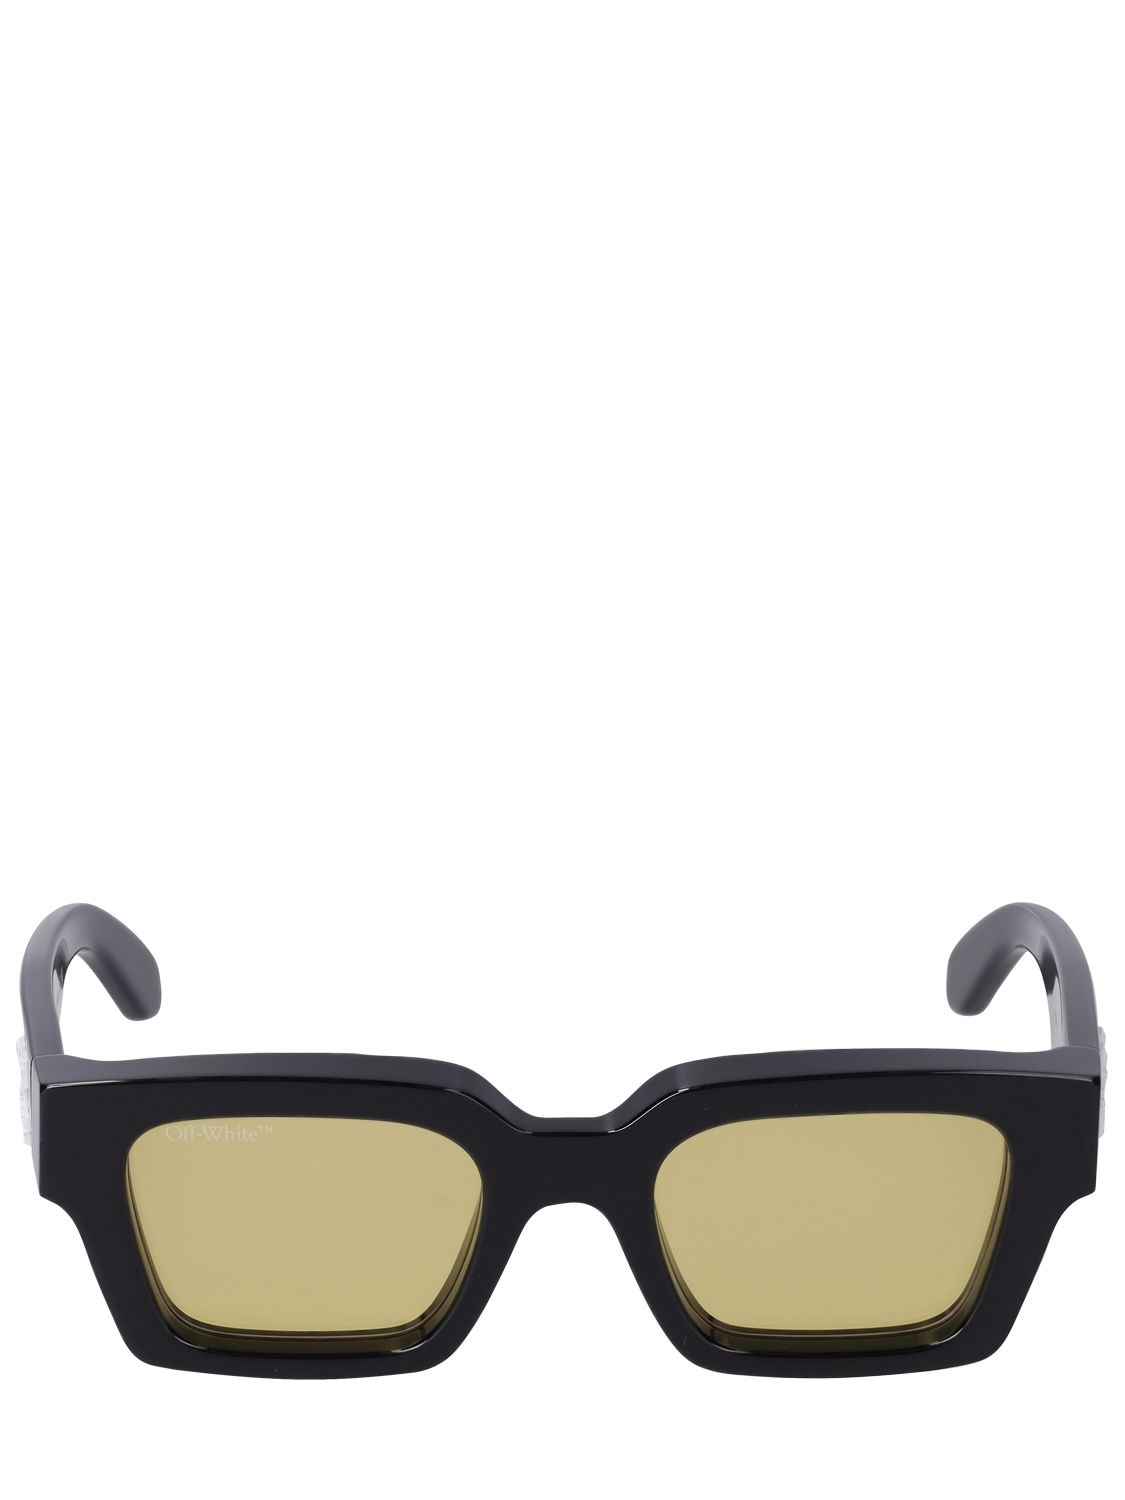 Off-White Black & Yellow Virgil Sunglasses